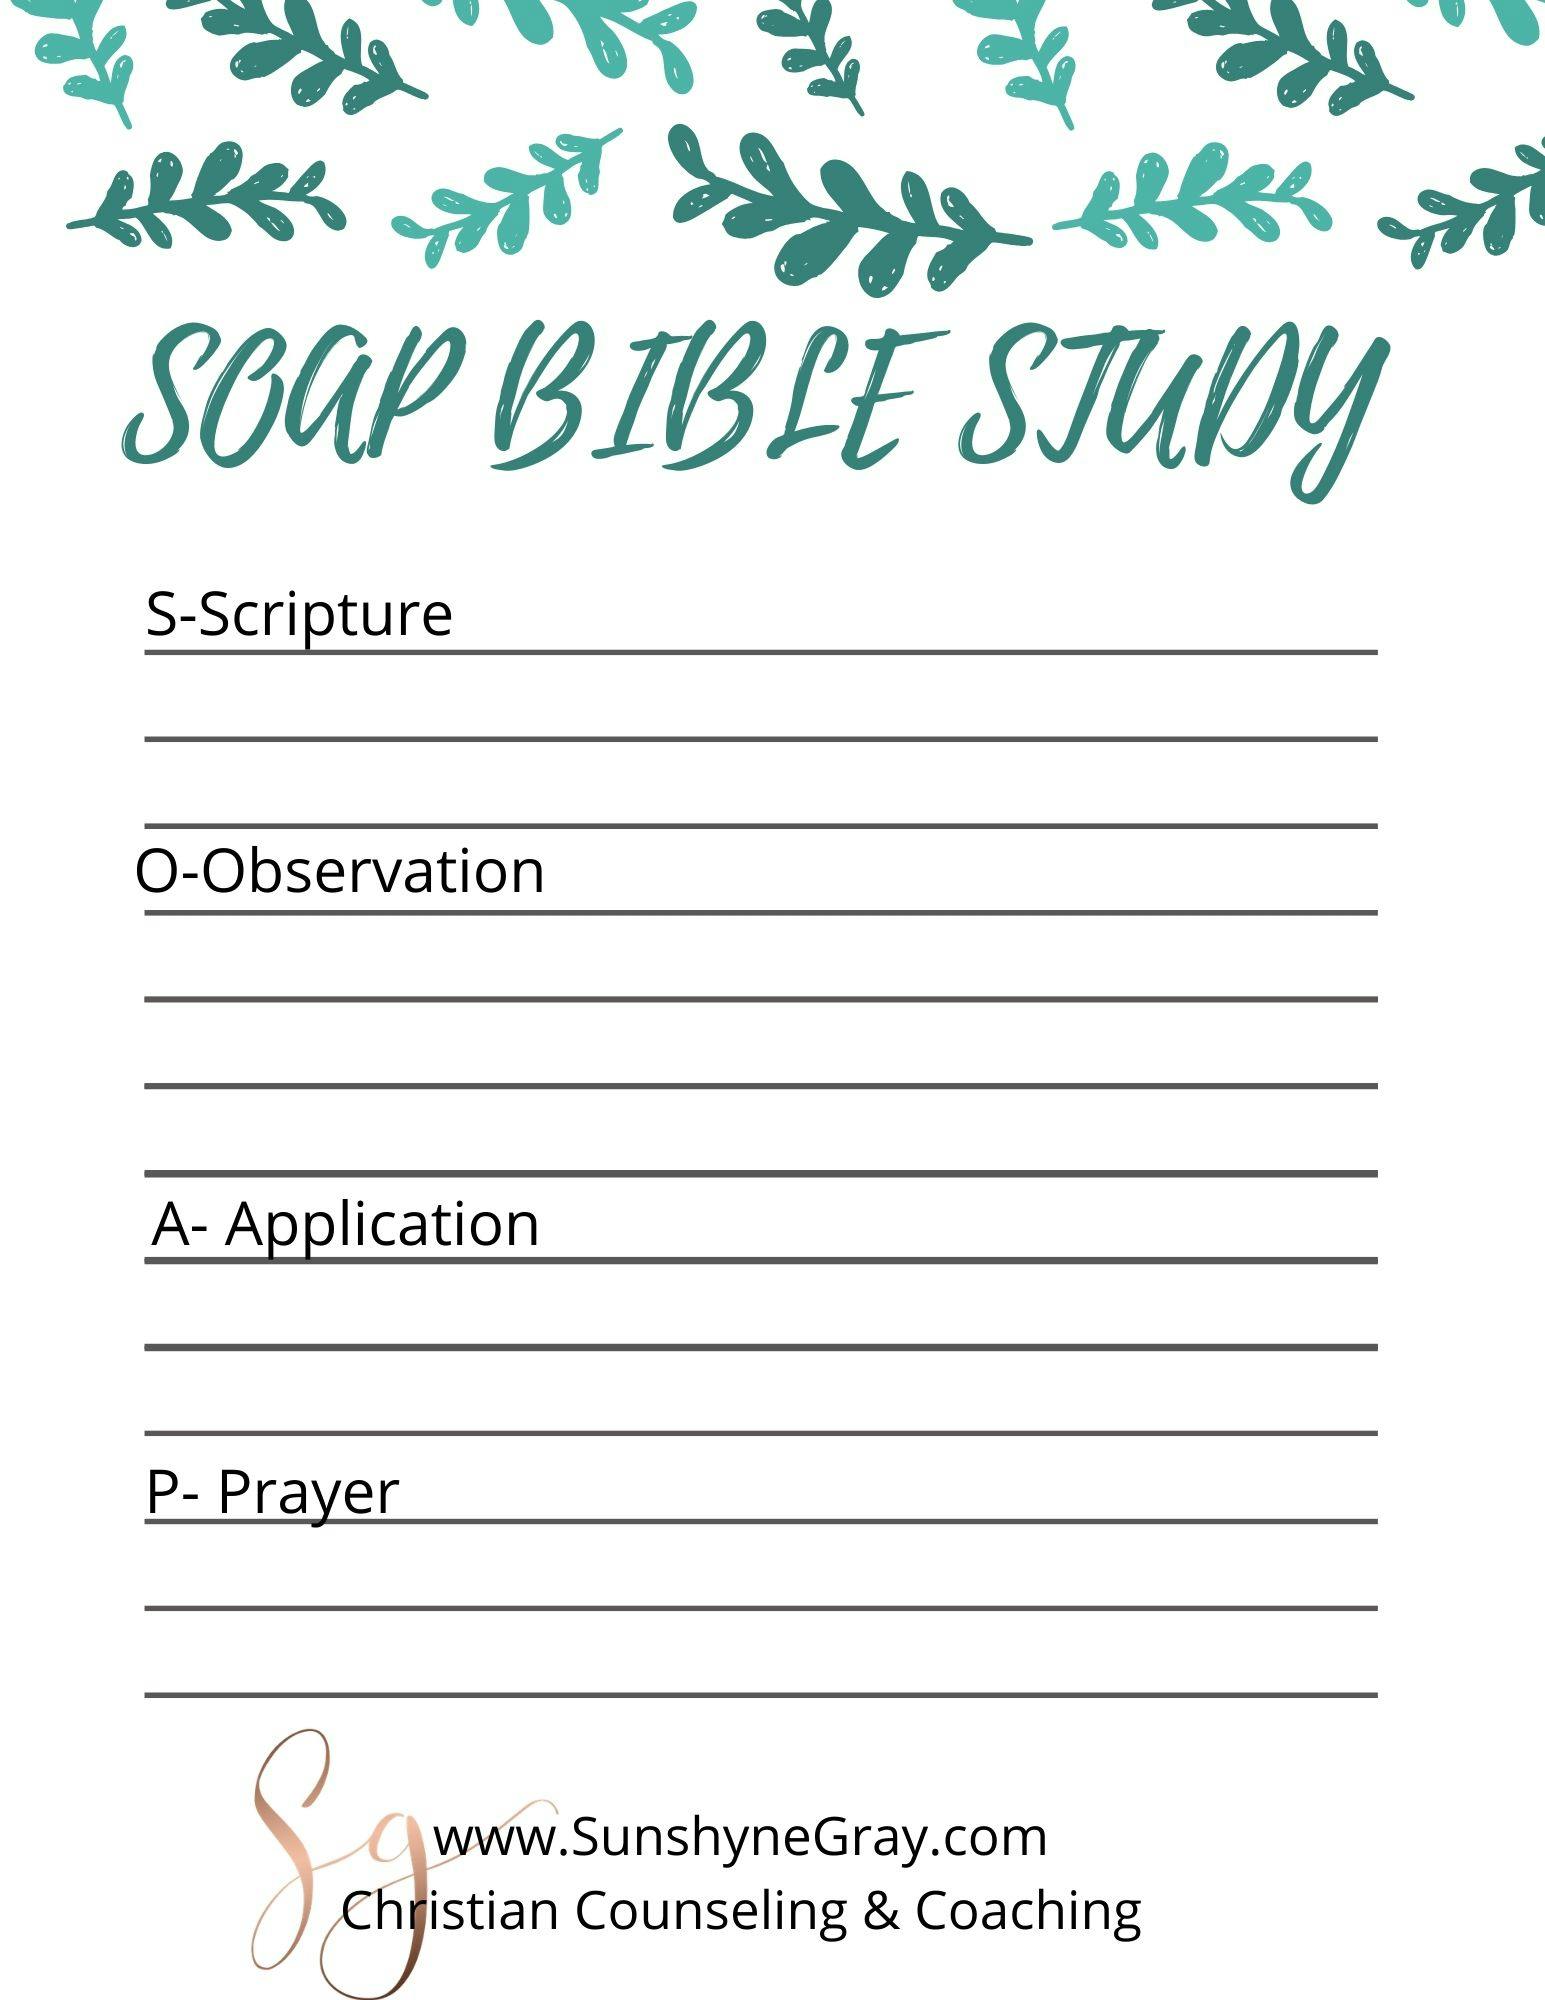 Soap Bible Study Method Free Printable Christian Counseling